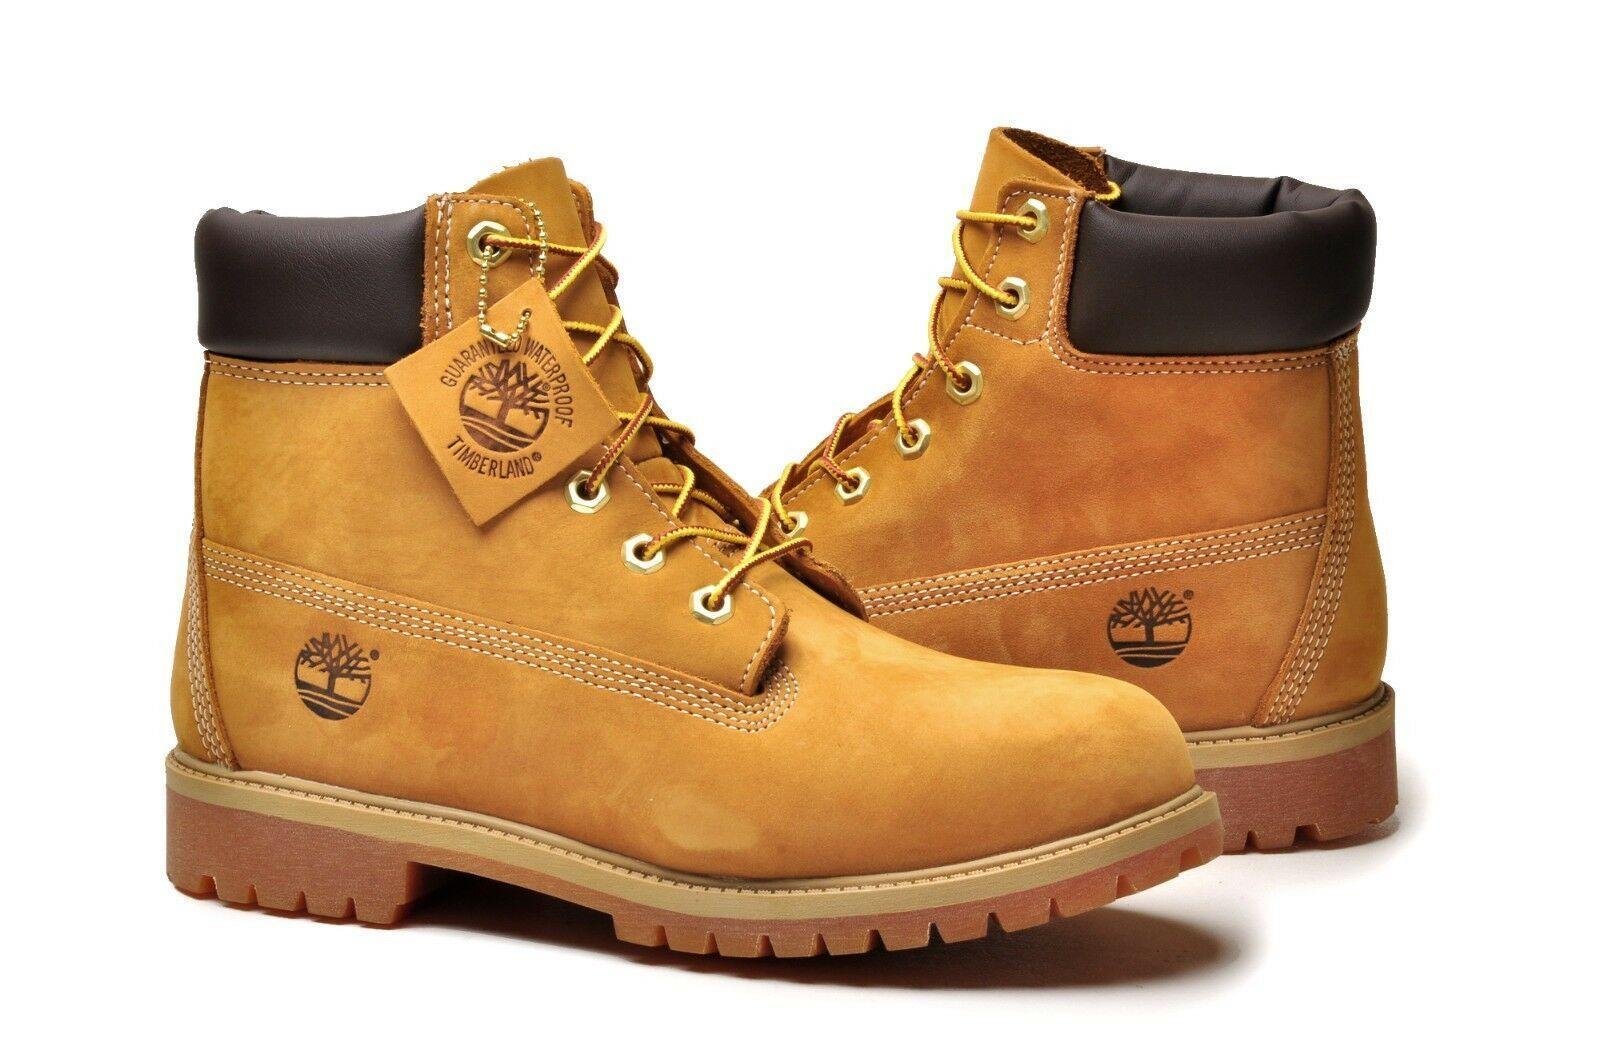 Timberland Womens Premium 6"" Waterproof Leather Boots Shoes - Wheat Nubuck - US 11